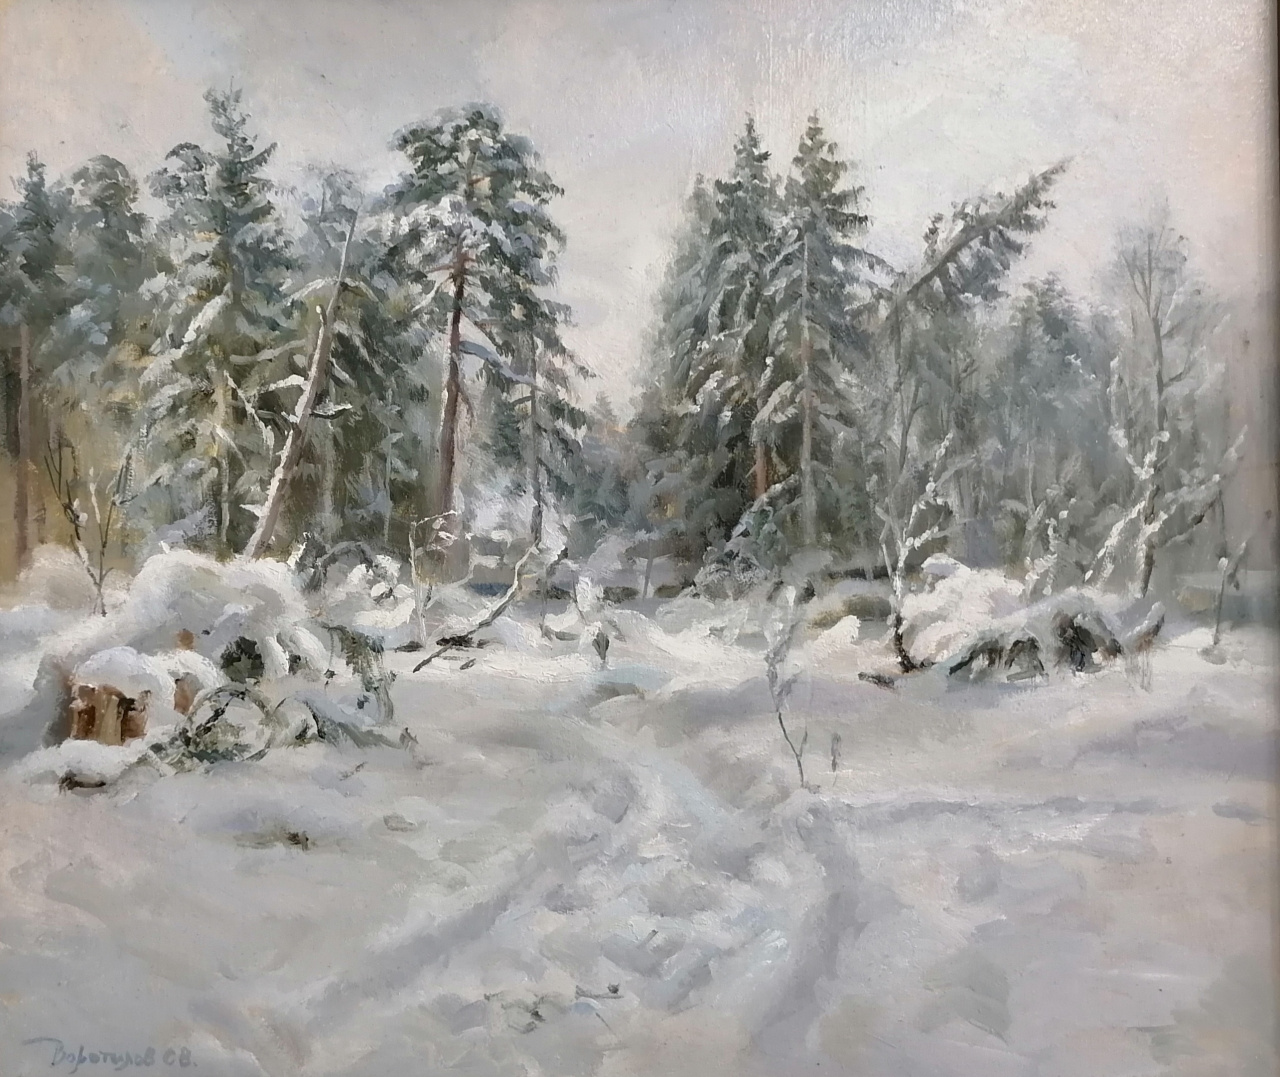 Авторская картина Воротилова С.В. "Зима" 